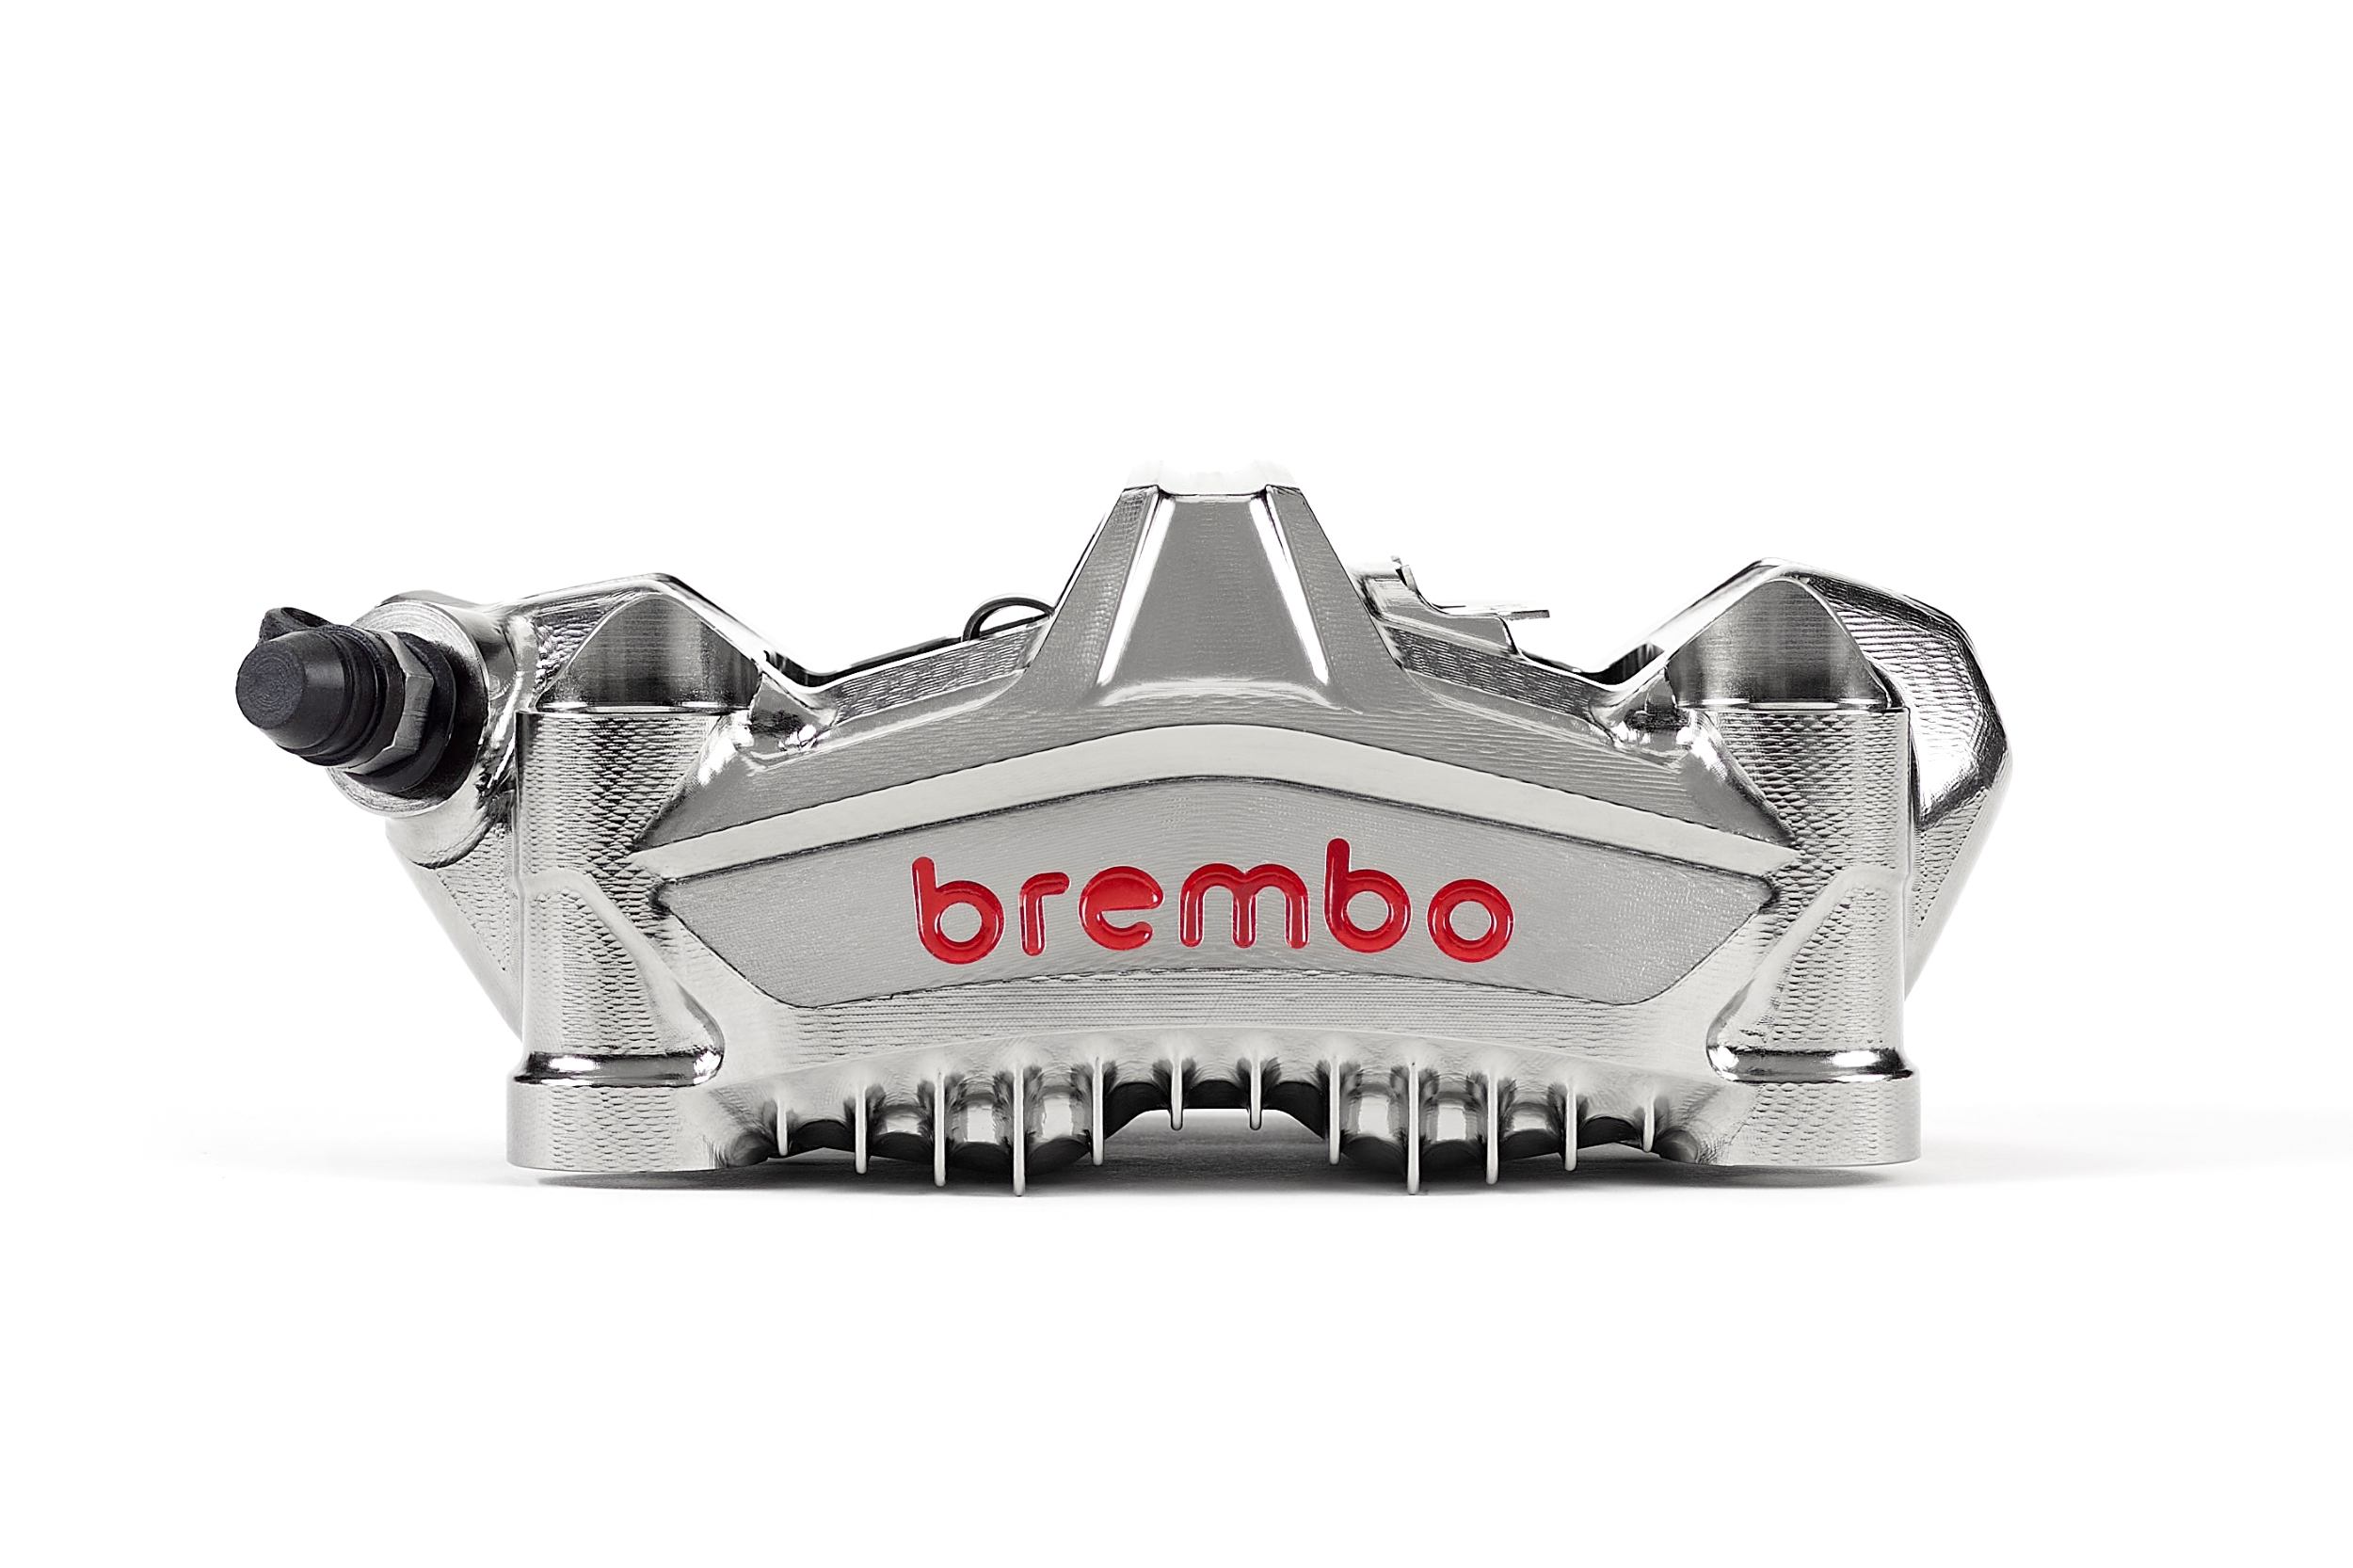 https://www.brembo.com/en/PublishingImages/company/news/new-brembo-gp4-motogp-brake-caliper/Brembo_GP4-MotoGP_2.jpg